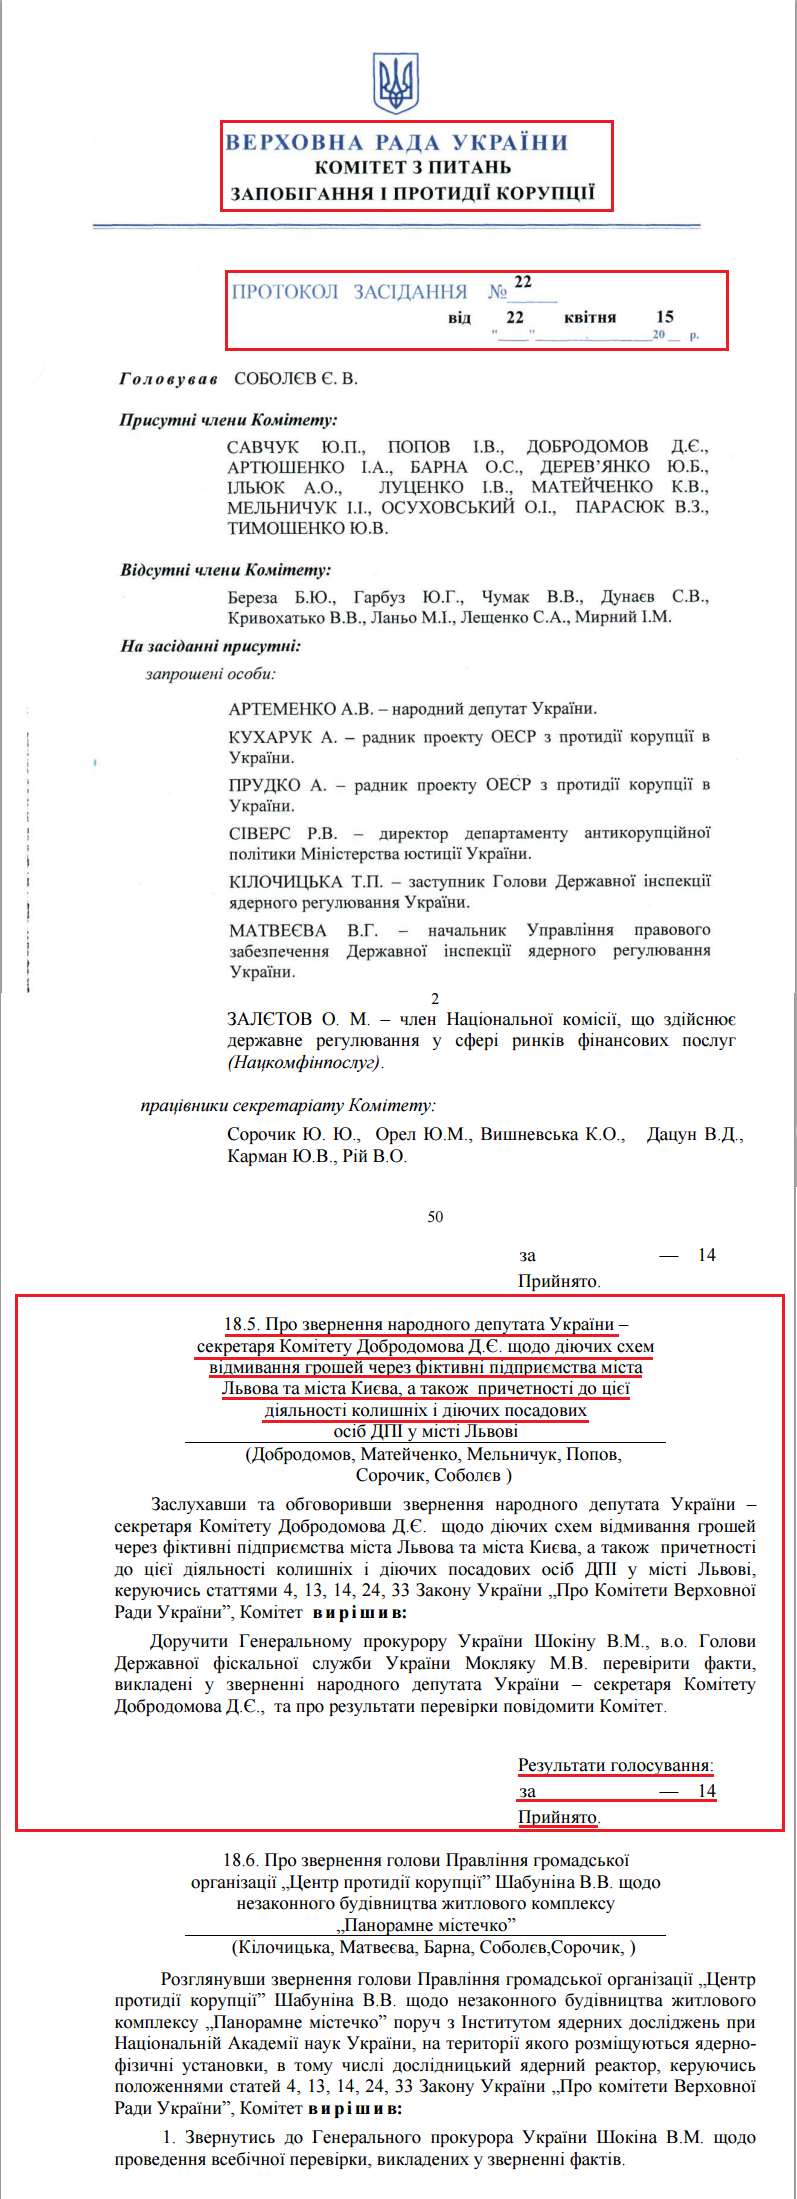 http://crimecor.rada.gov.ua/komzloch/doccatalog/document?id=55304